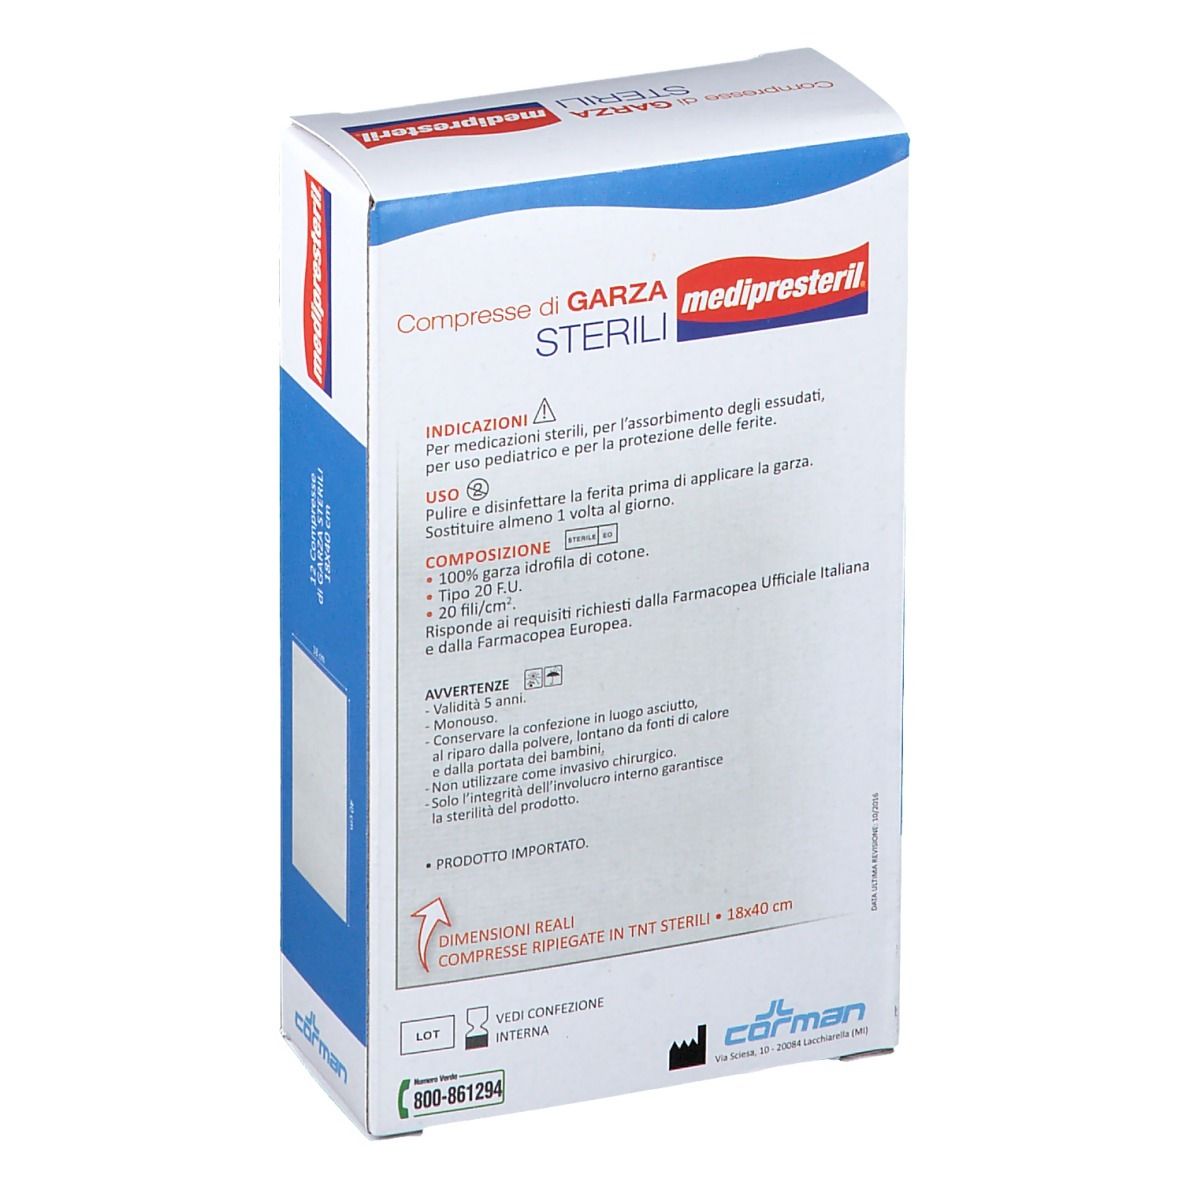 Medipresteril® Compresse di Garza Sterili  18 x 40 cm